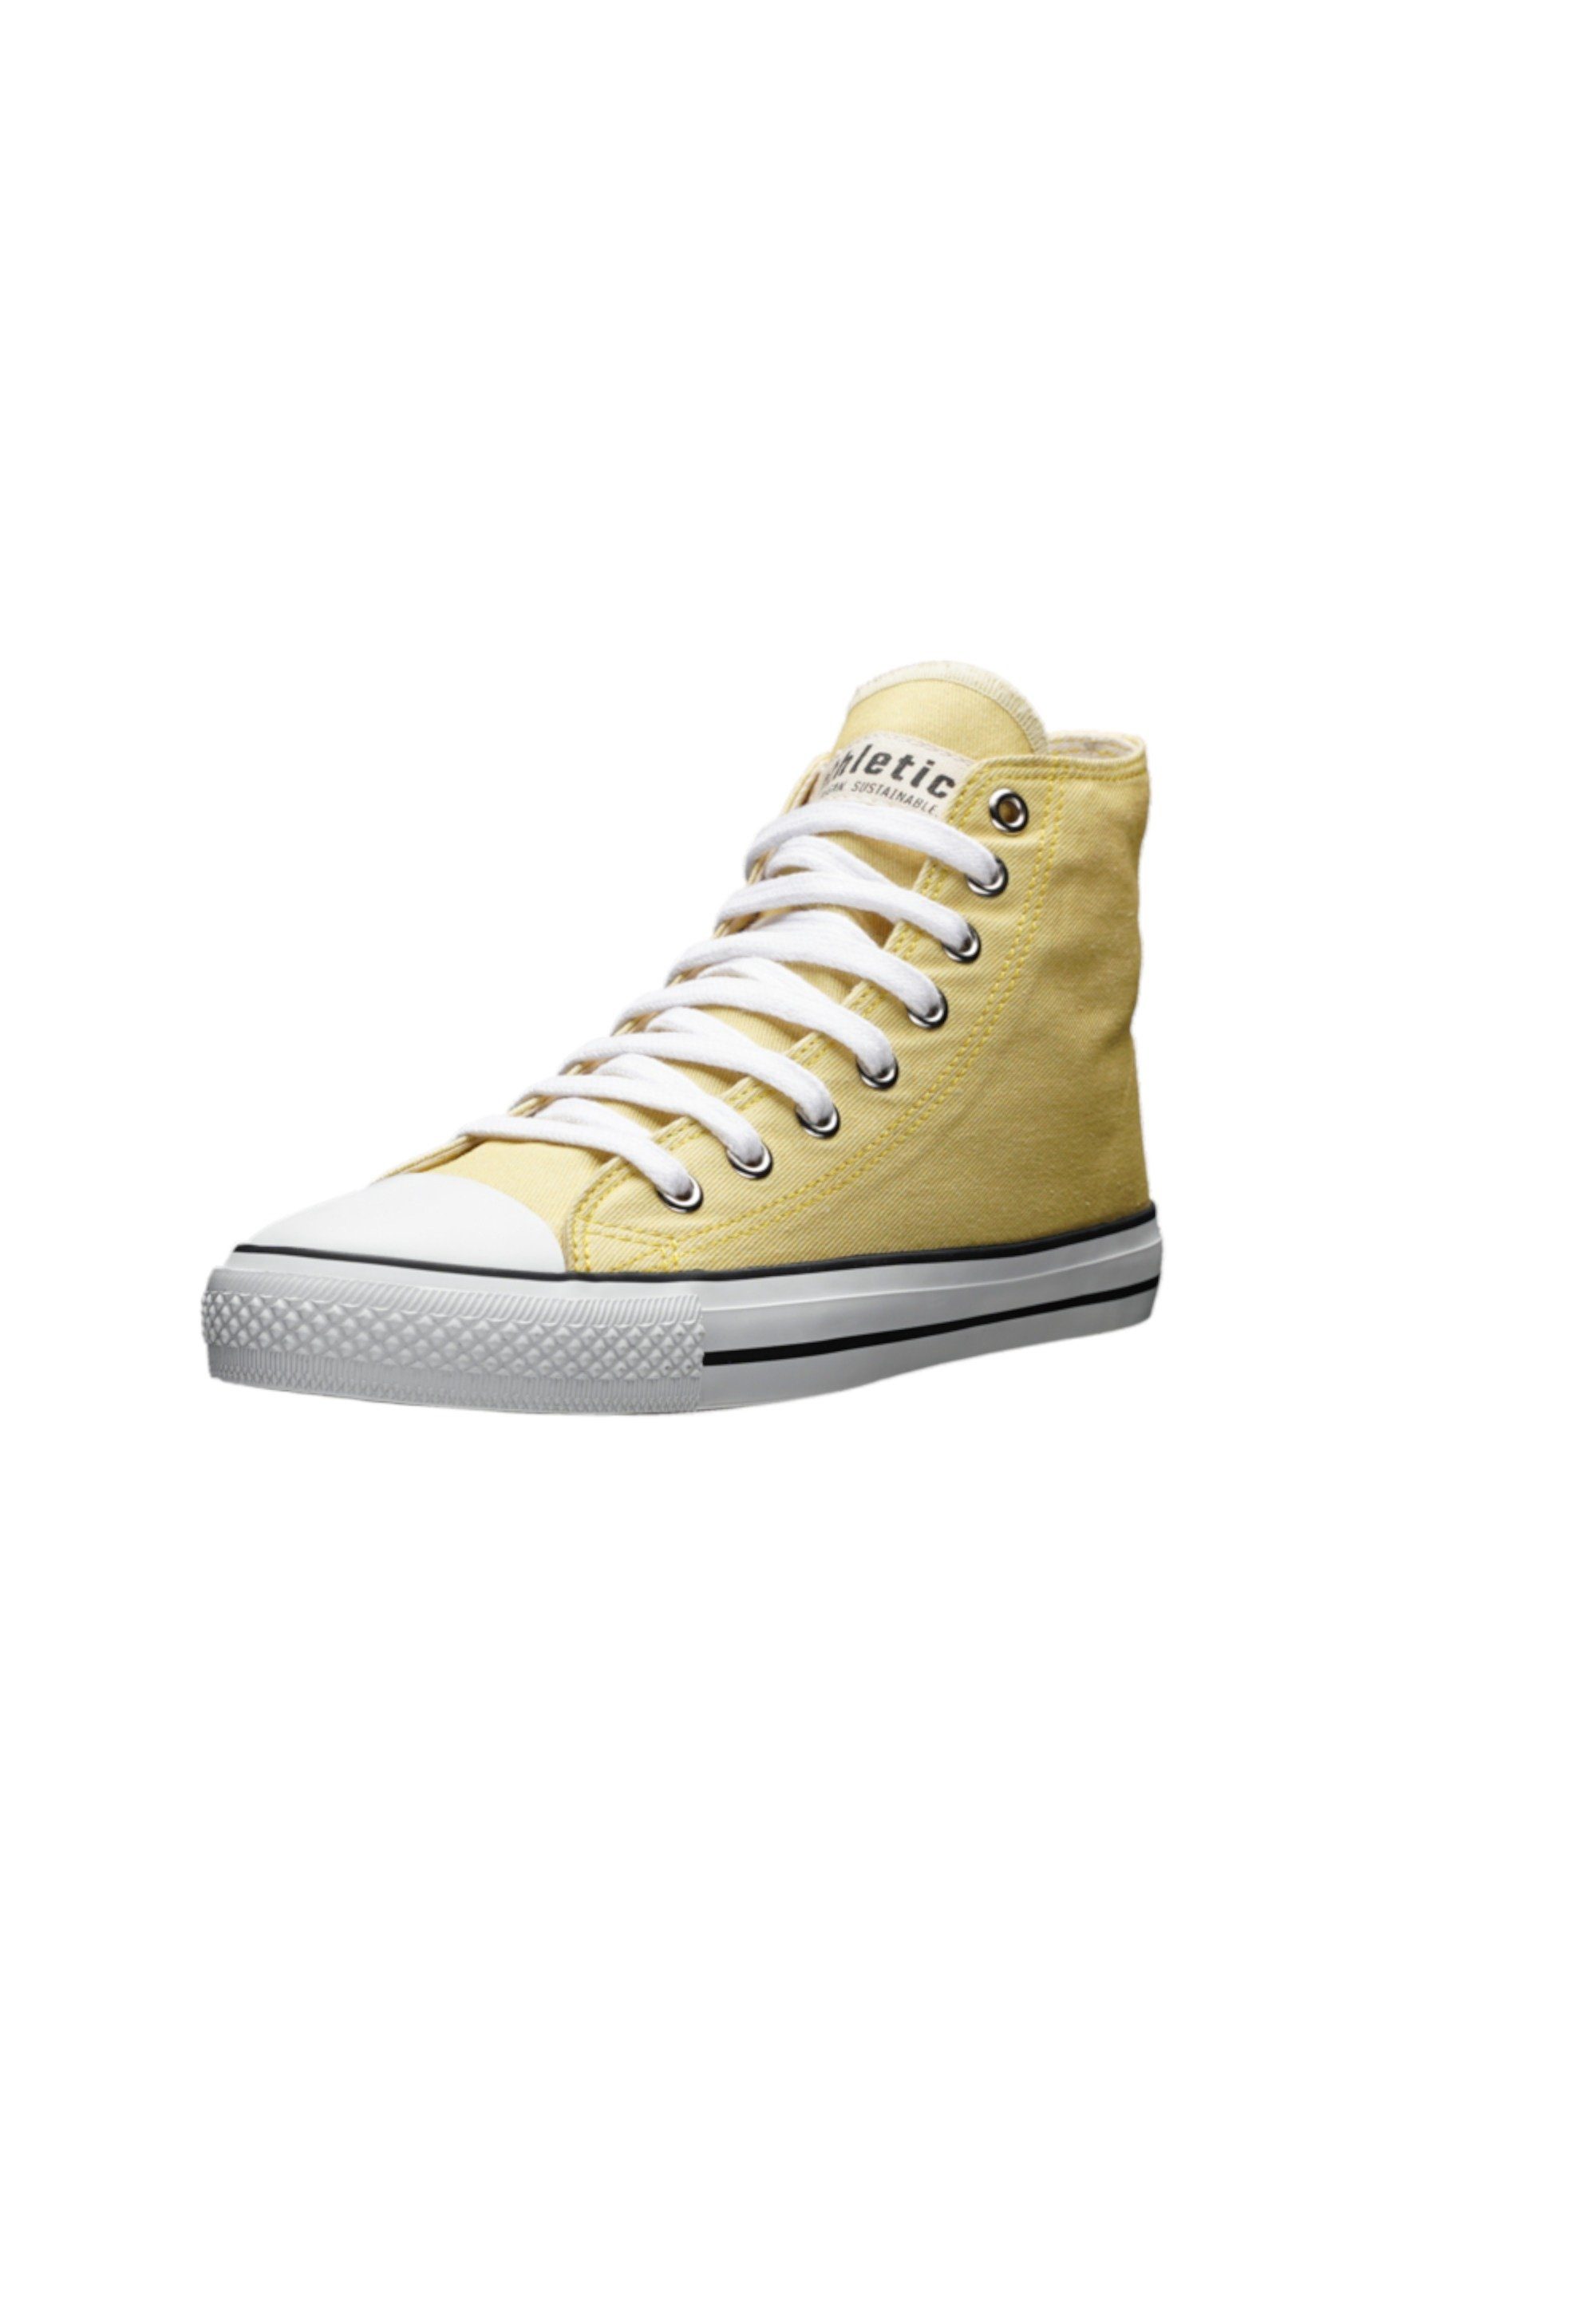 ETHLETIC White Cap Hi Cut Sneaker Fairtrade Produkt Watersign Yellow - Just White | Sneaker